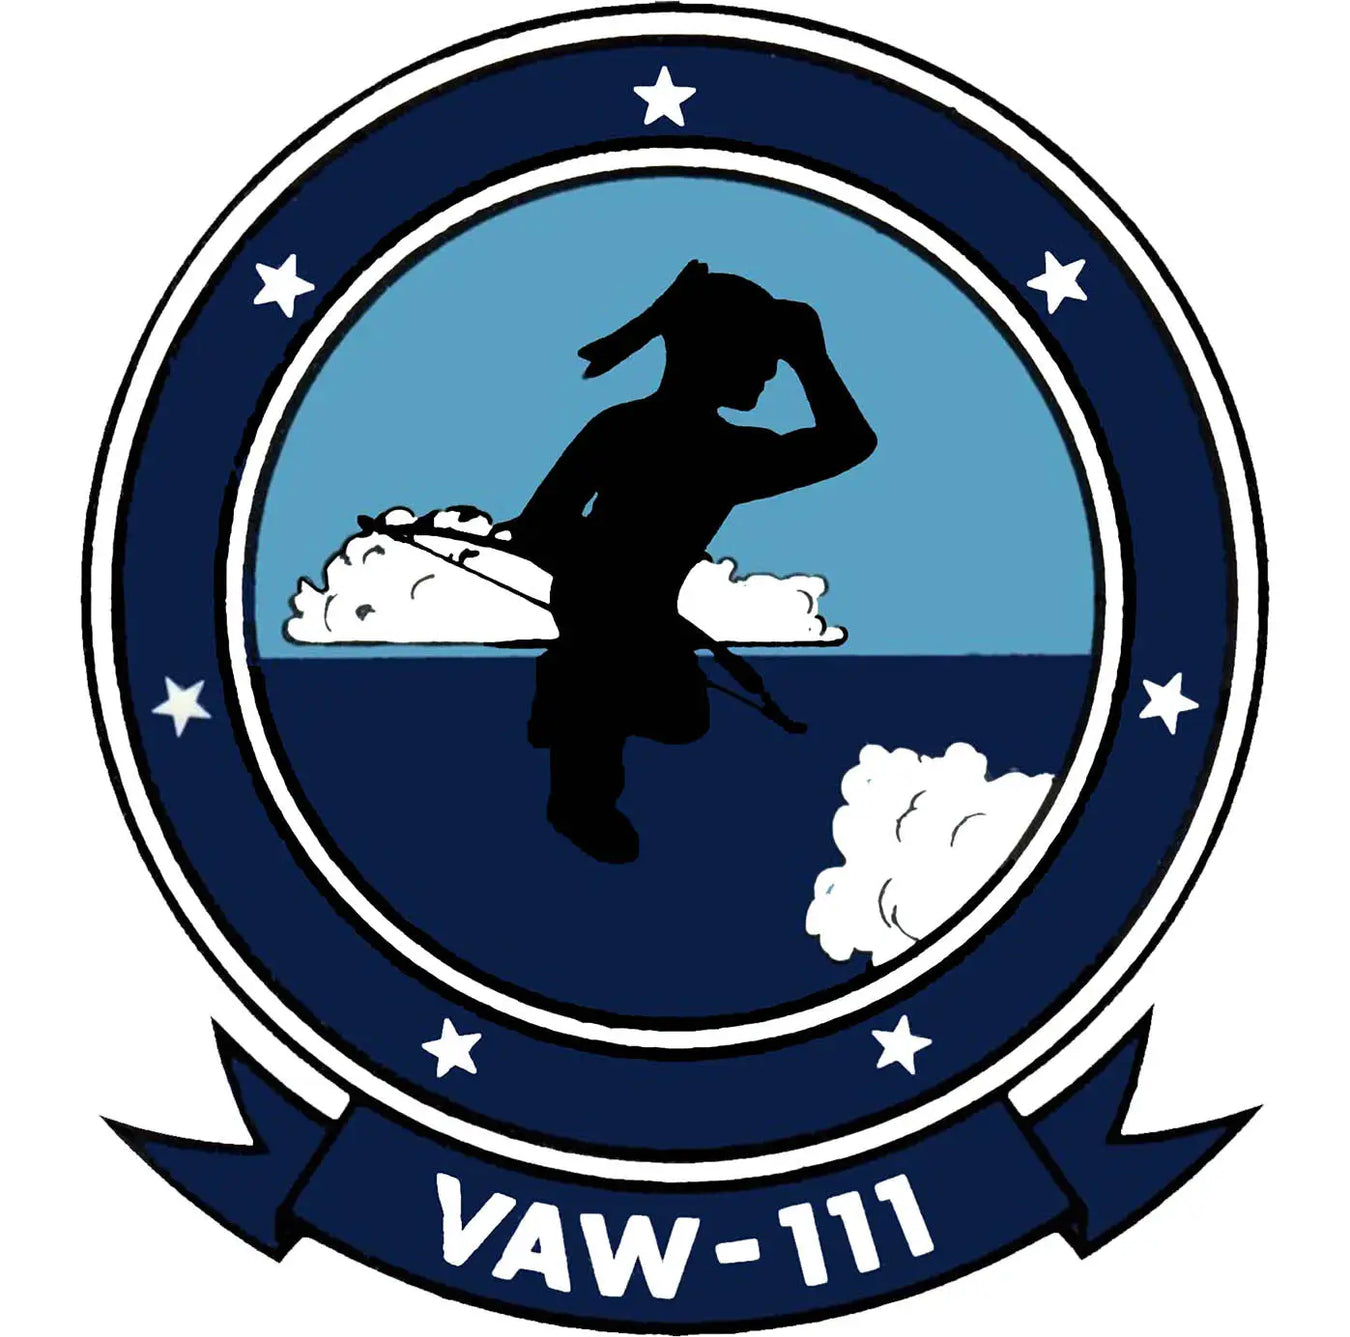 Airborne Command & Control Squadron 111 (VAW-111)